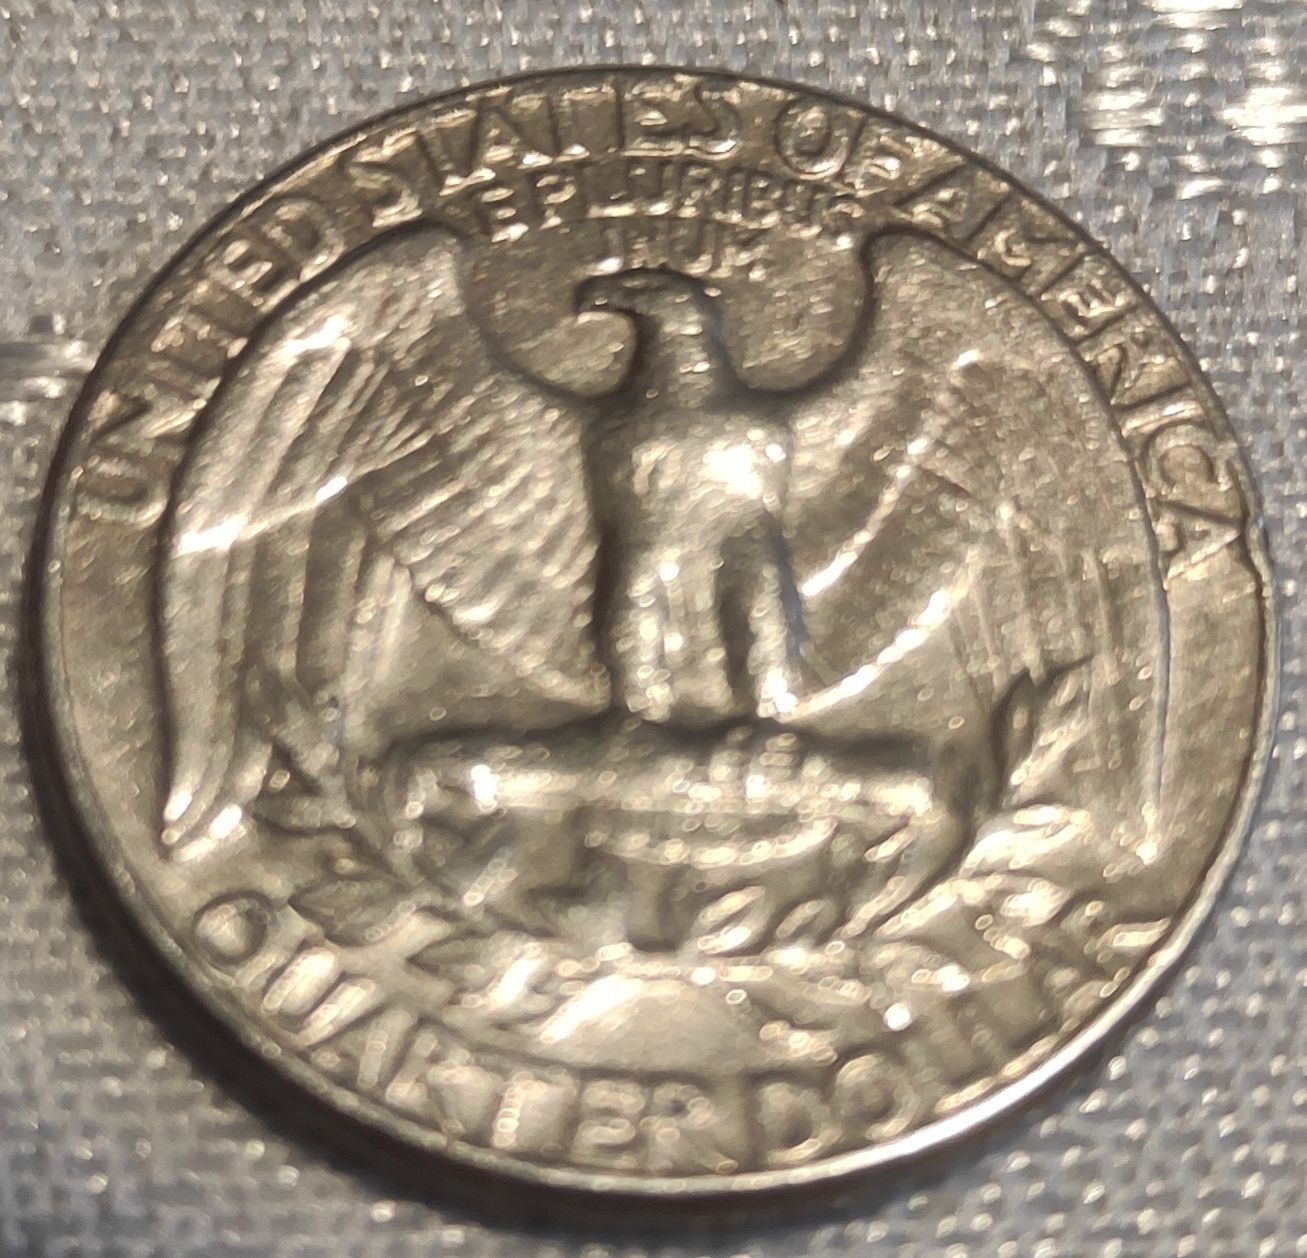 Moneta kolekcjonerska destrukt ćwierć dolara z 1974r